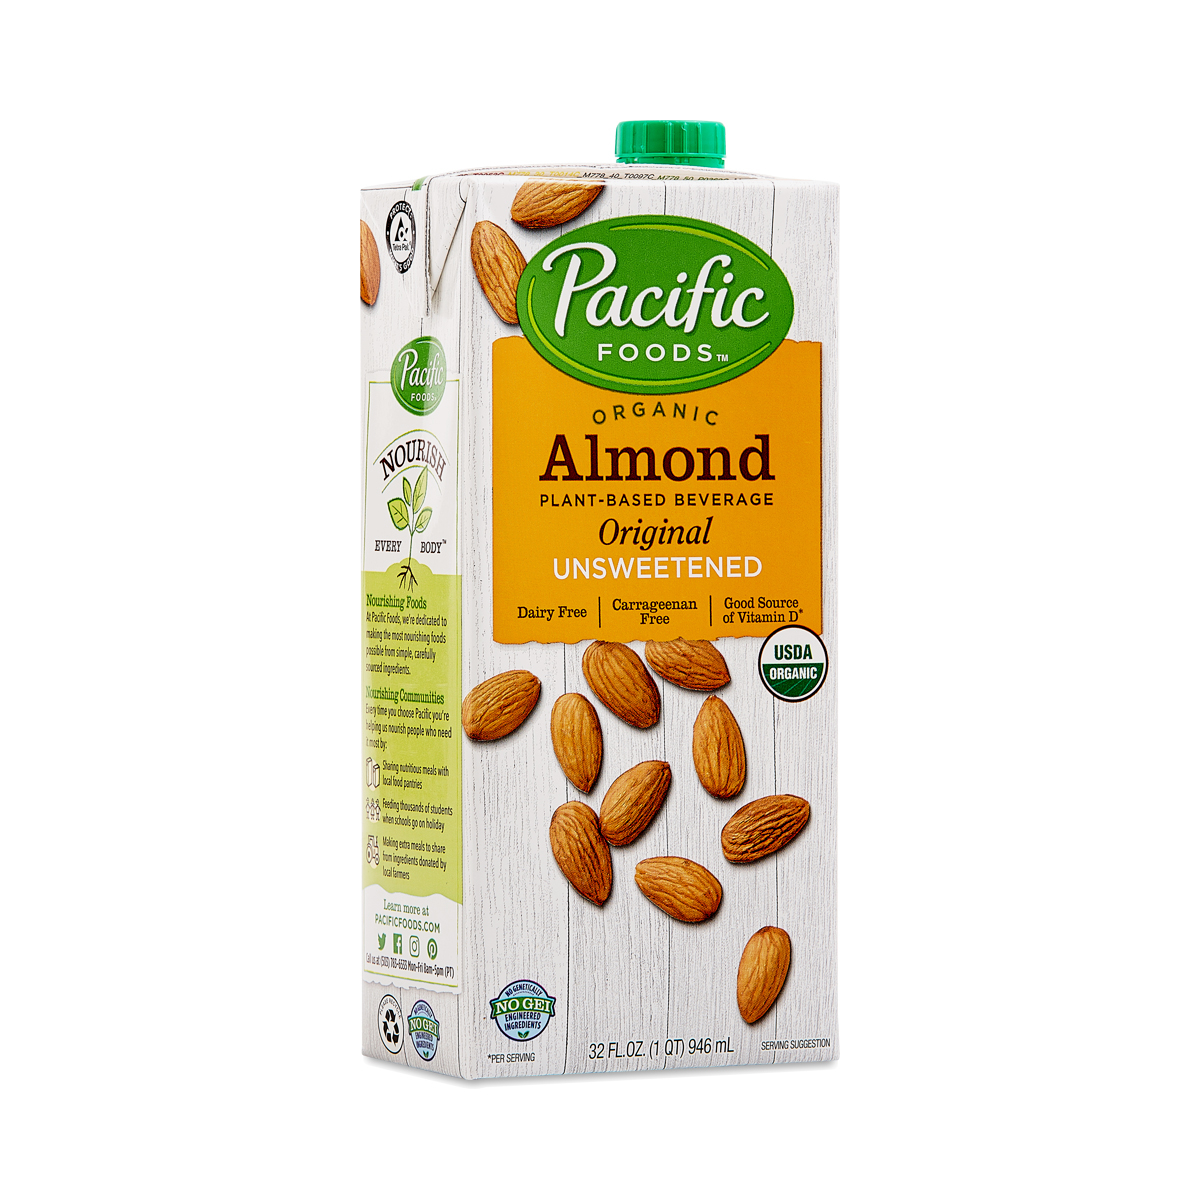 Pacific Foods Organic Almond Beverage, Unsweetened Original 32 fl oz carton